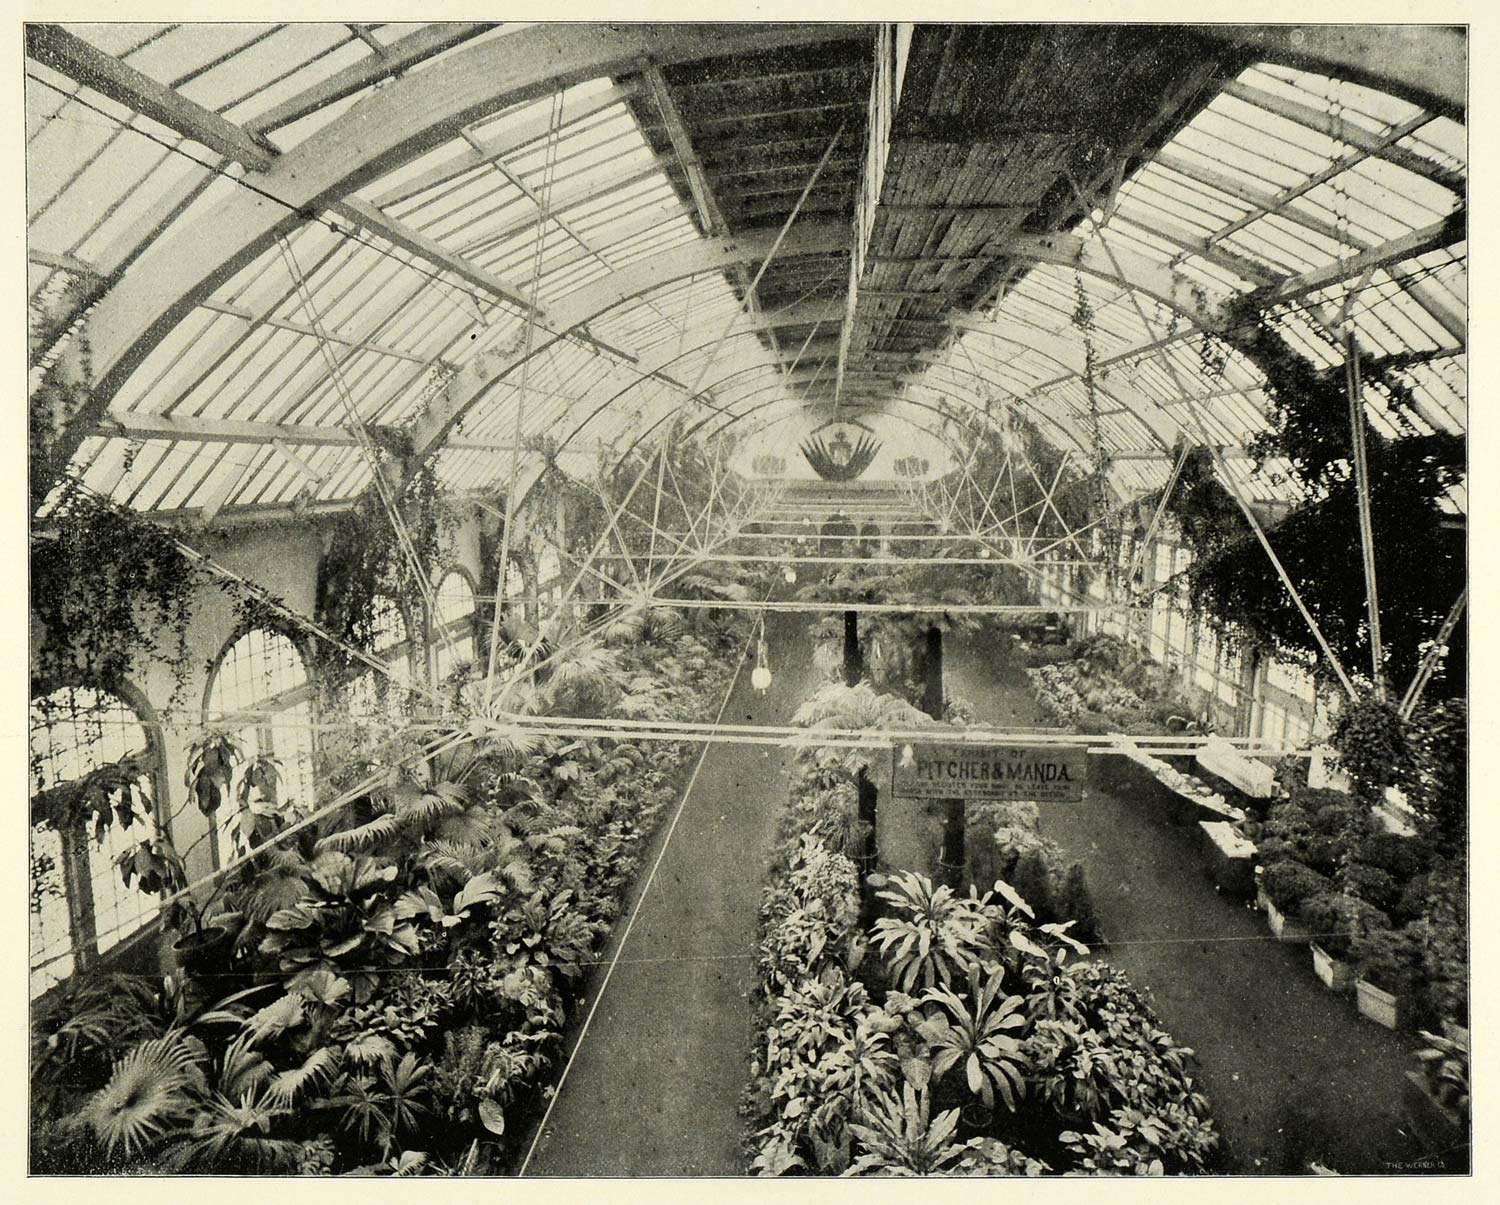 1893 Print Conservatory Chicago World's Fair Horticulture Building Plants FAR1